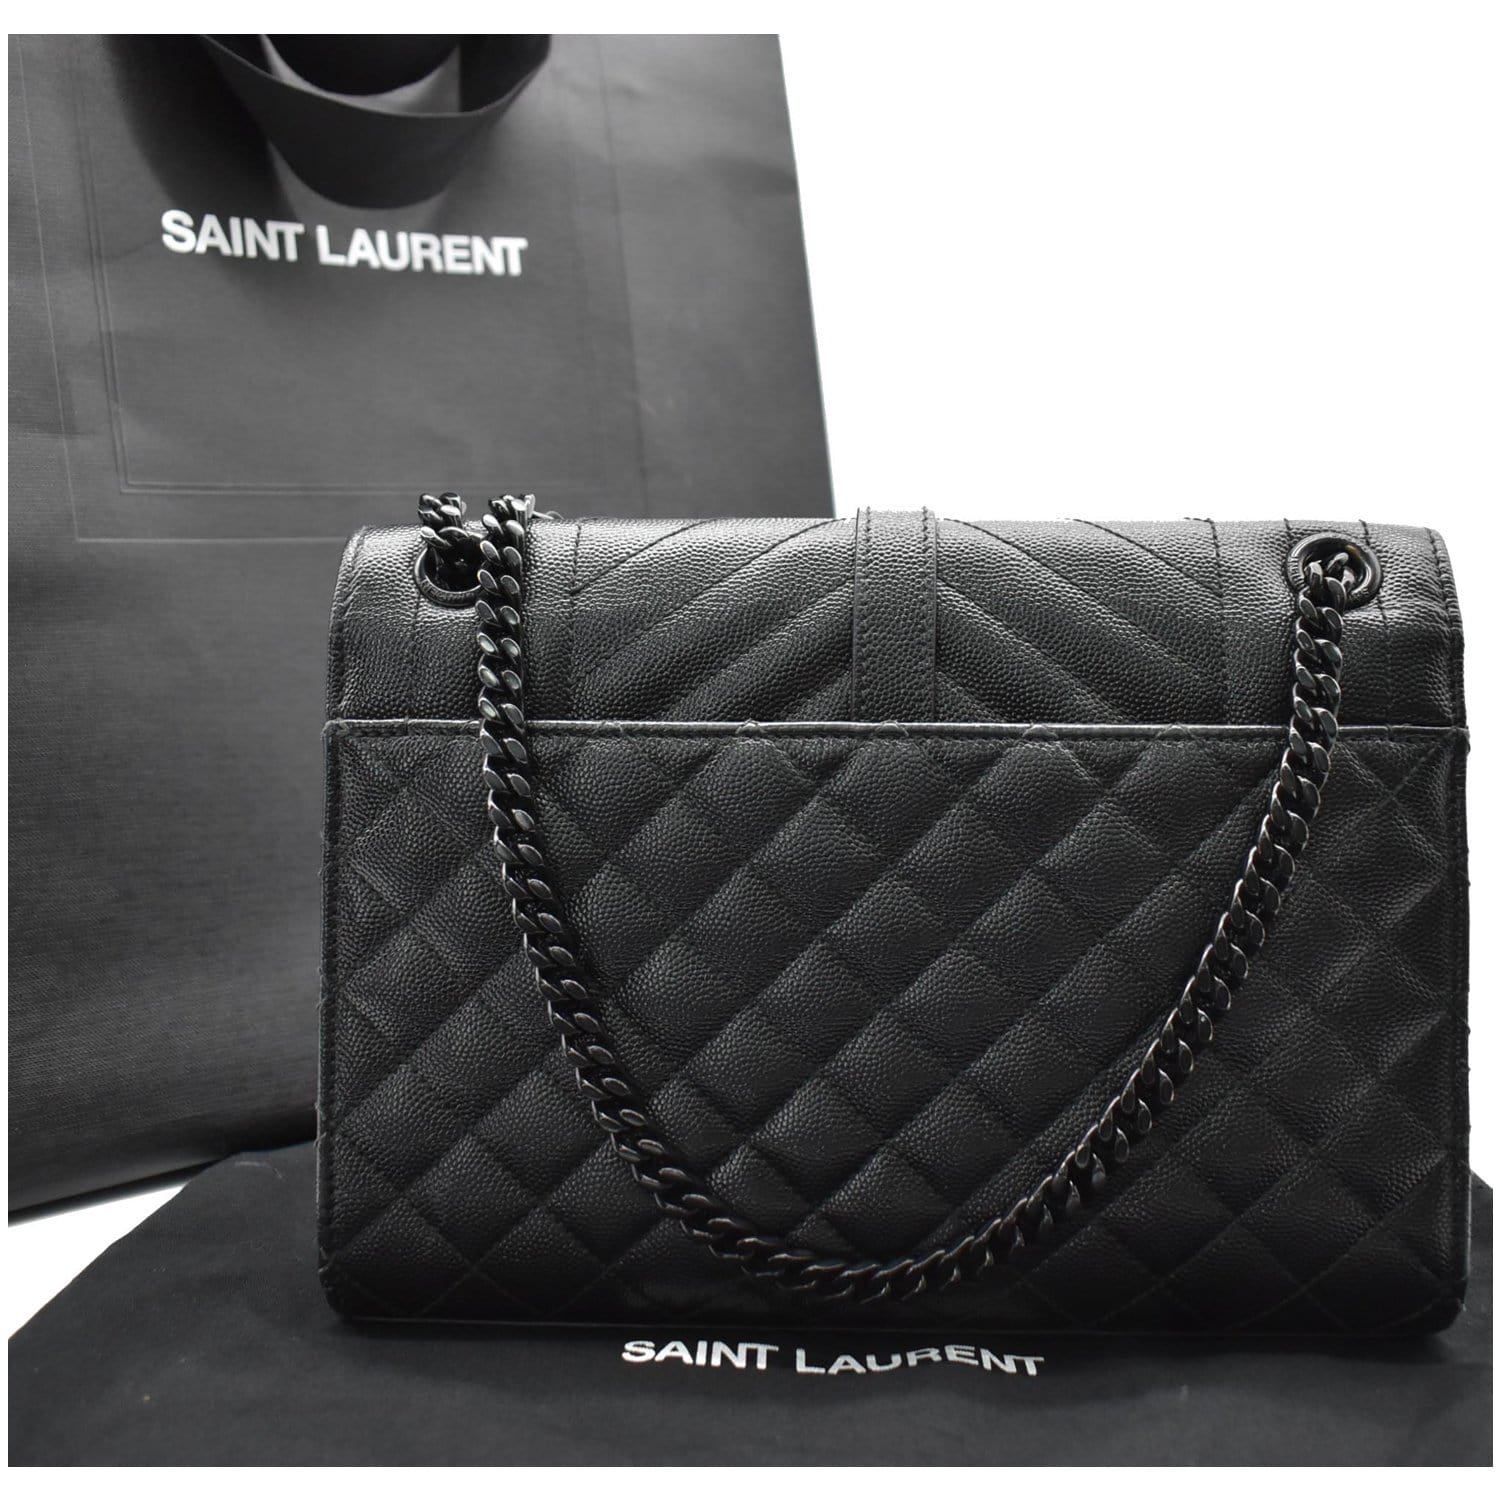 Yves Saint Laurent Envelope Medium Matelassé Leather Crossbody Chain Bag Black